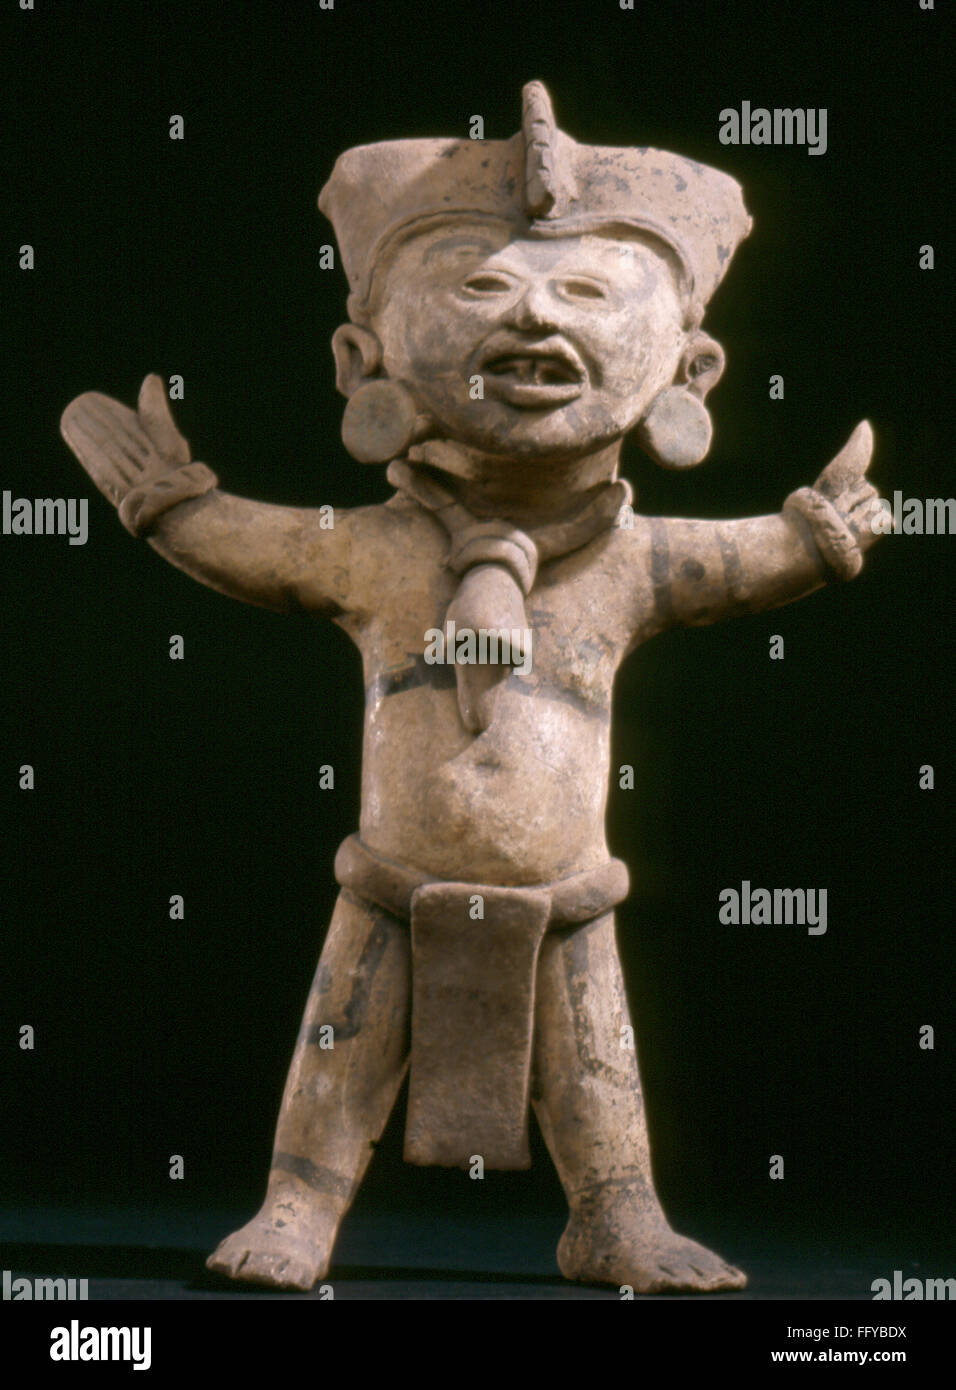 MEXICO: TOTONAC FIGURE. /nCeramic smiling man figure of the Totonac culture, Veracruz, Mexico, c600-900 A.D. Stock Photo